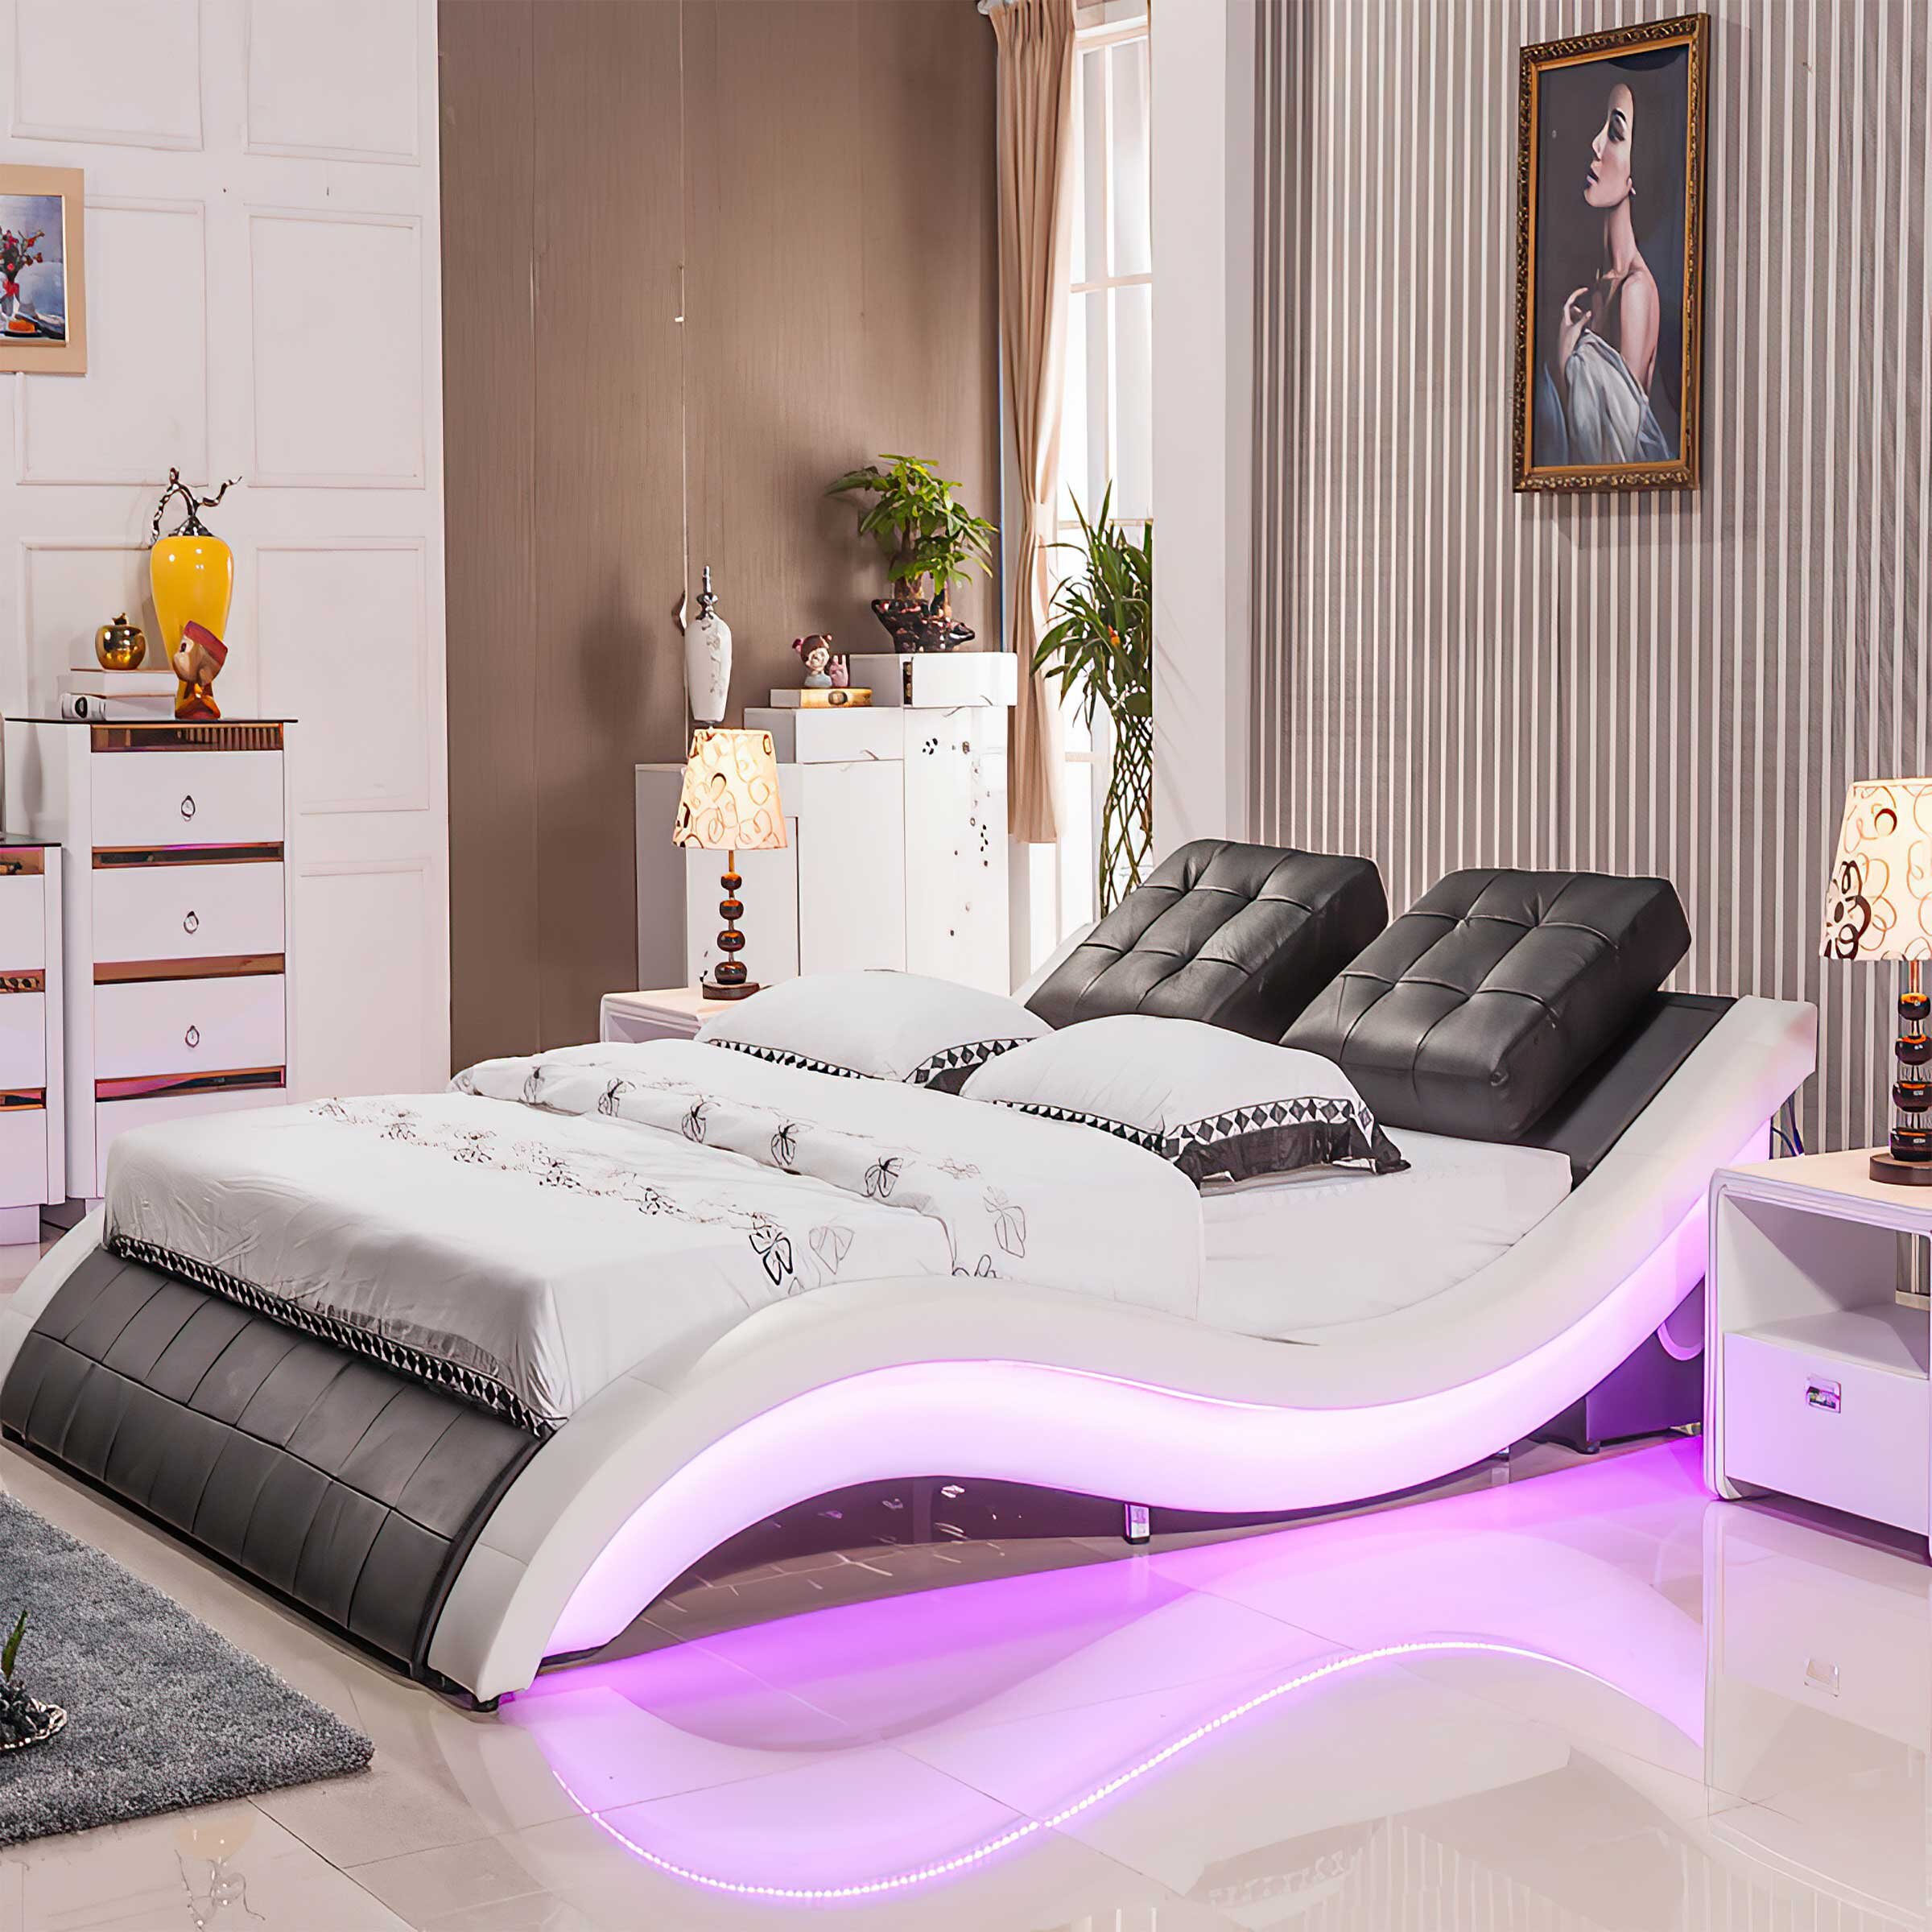 Jubilee Moderncontemporary Design Bianca Curved Modern Leather Platform Smart Bed Wi